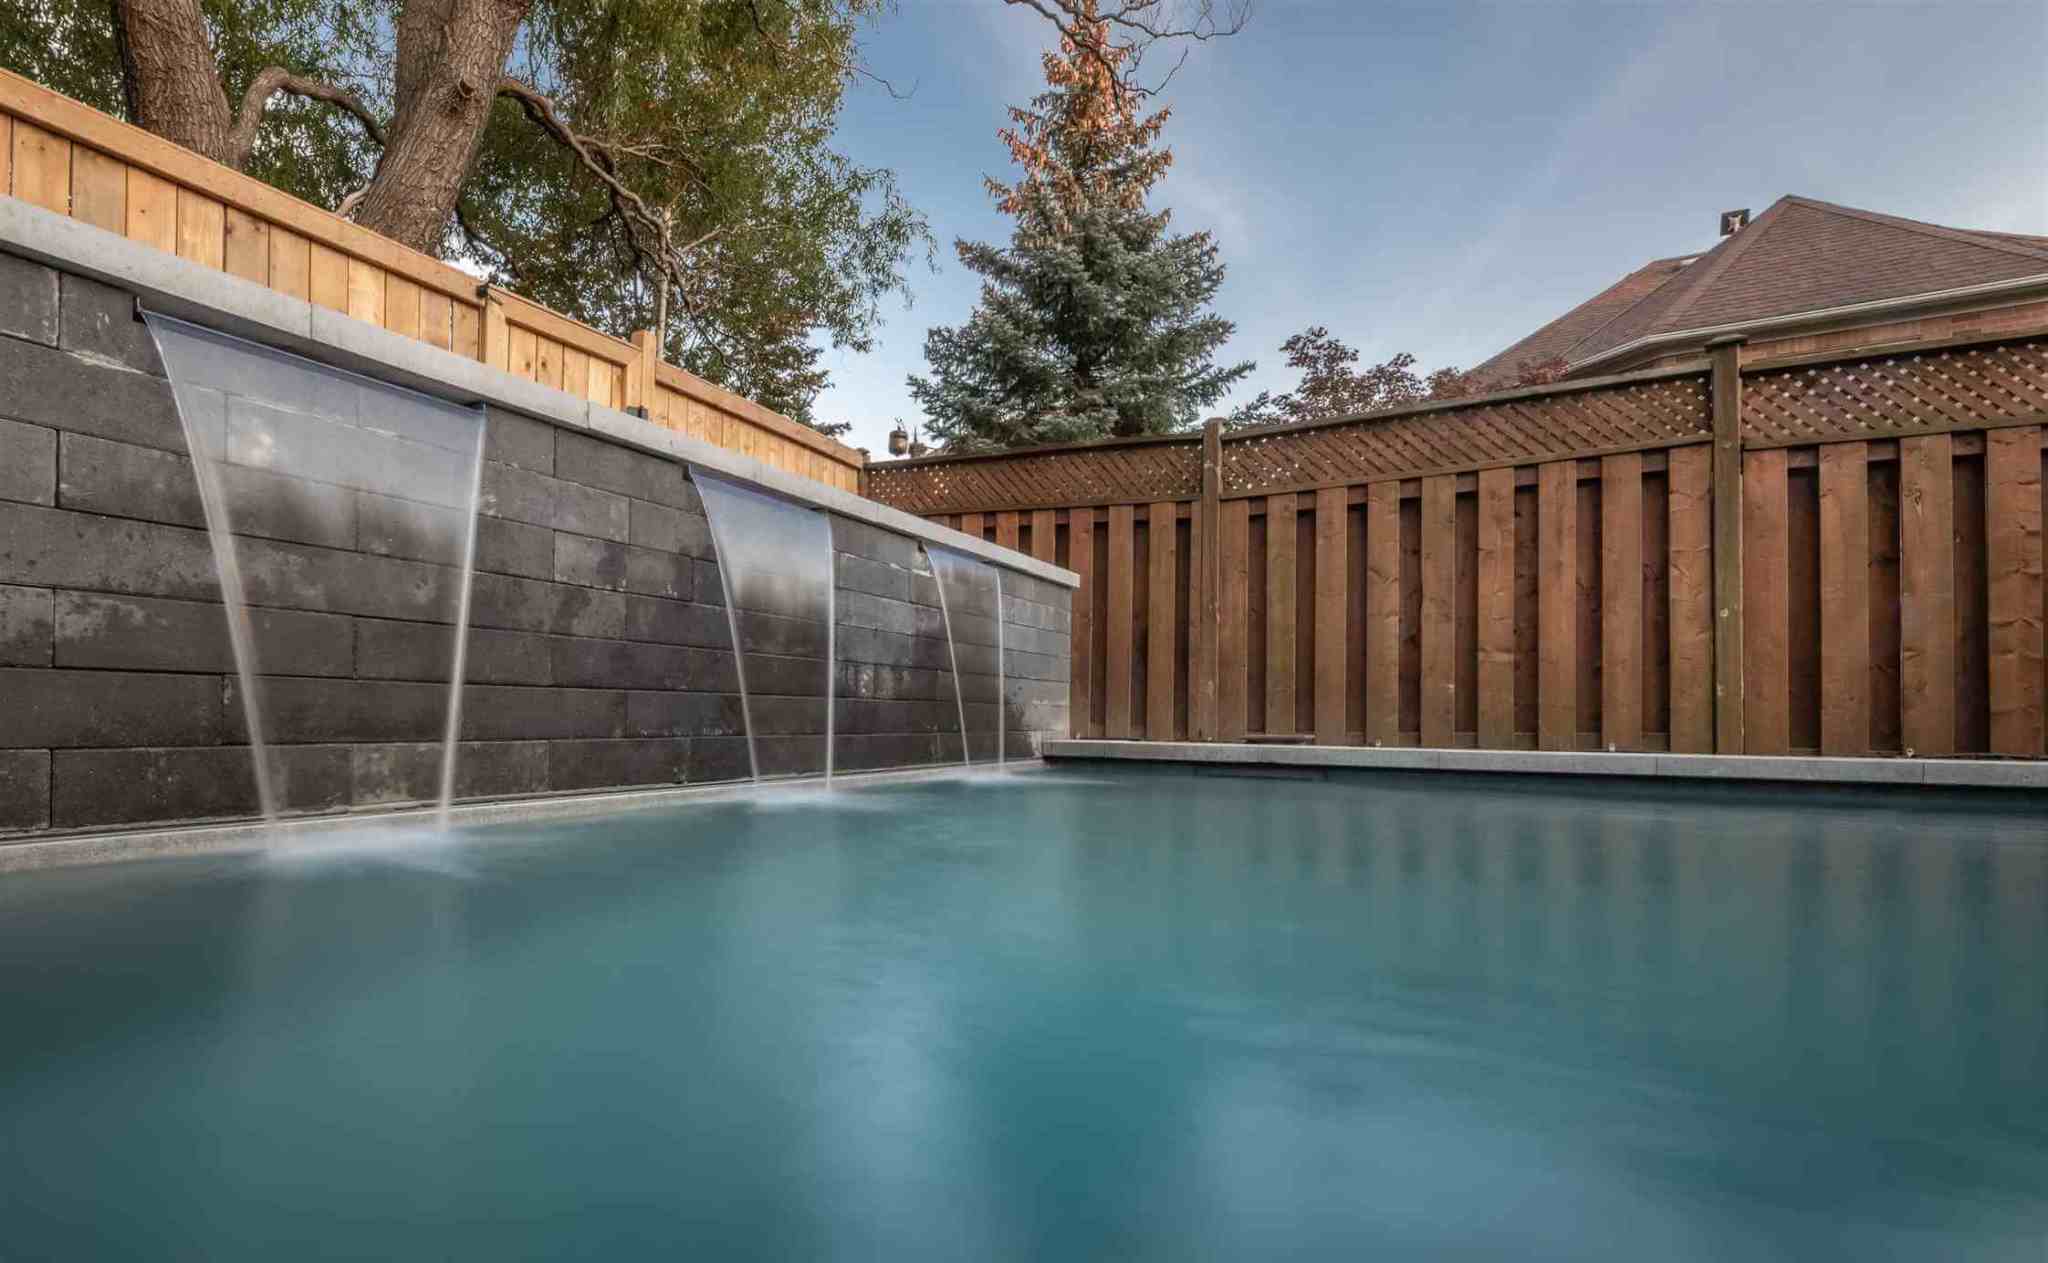 Swimming pool waterfalls installation